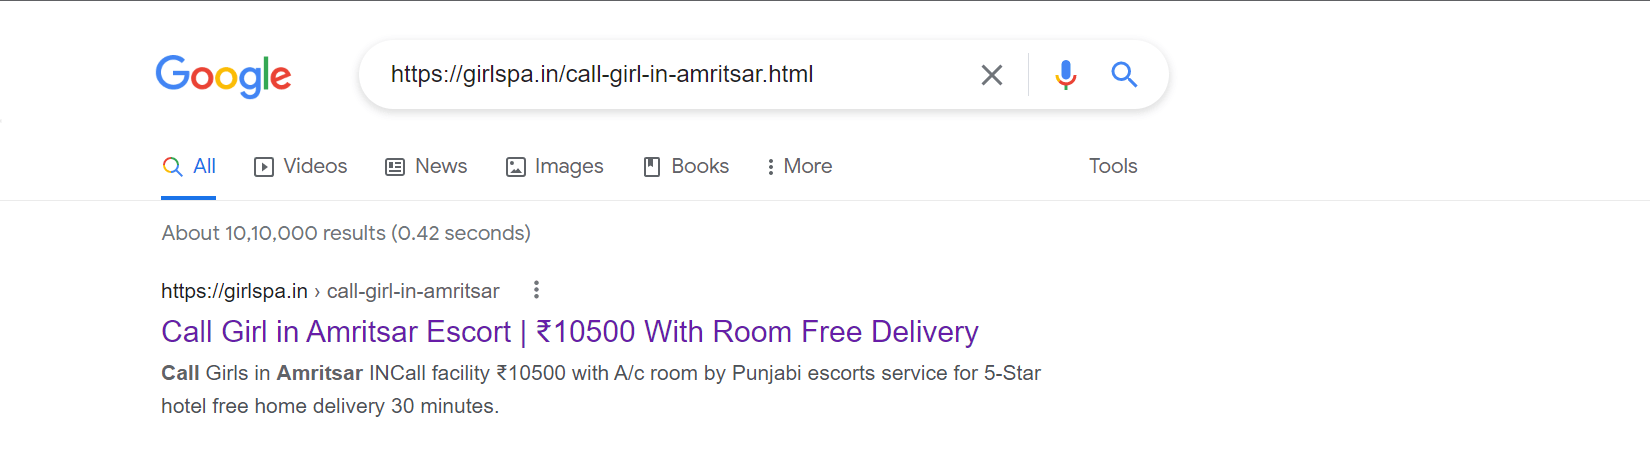 Call Girl In Amritsar